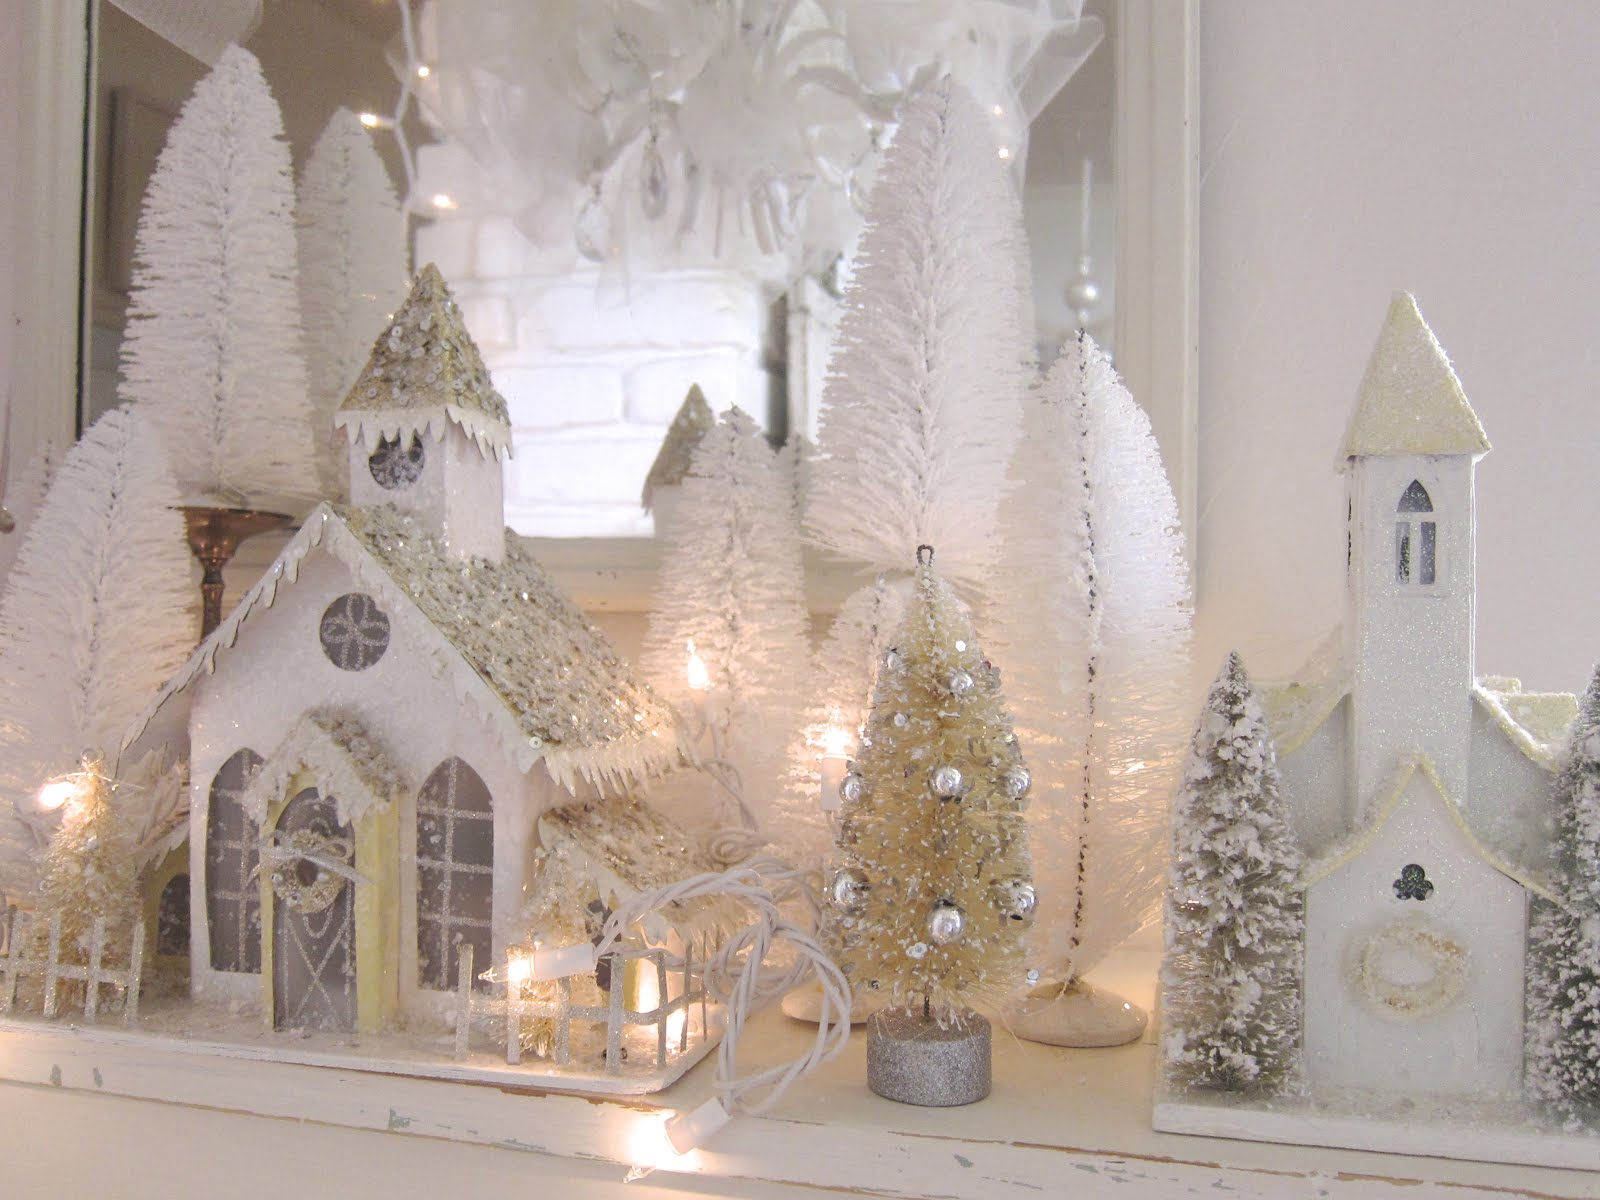 Sally's White Cottage Studio: December 2012